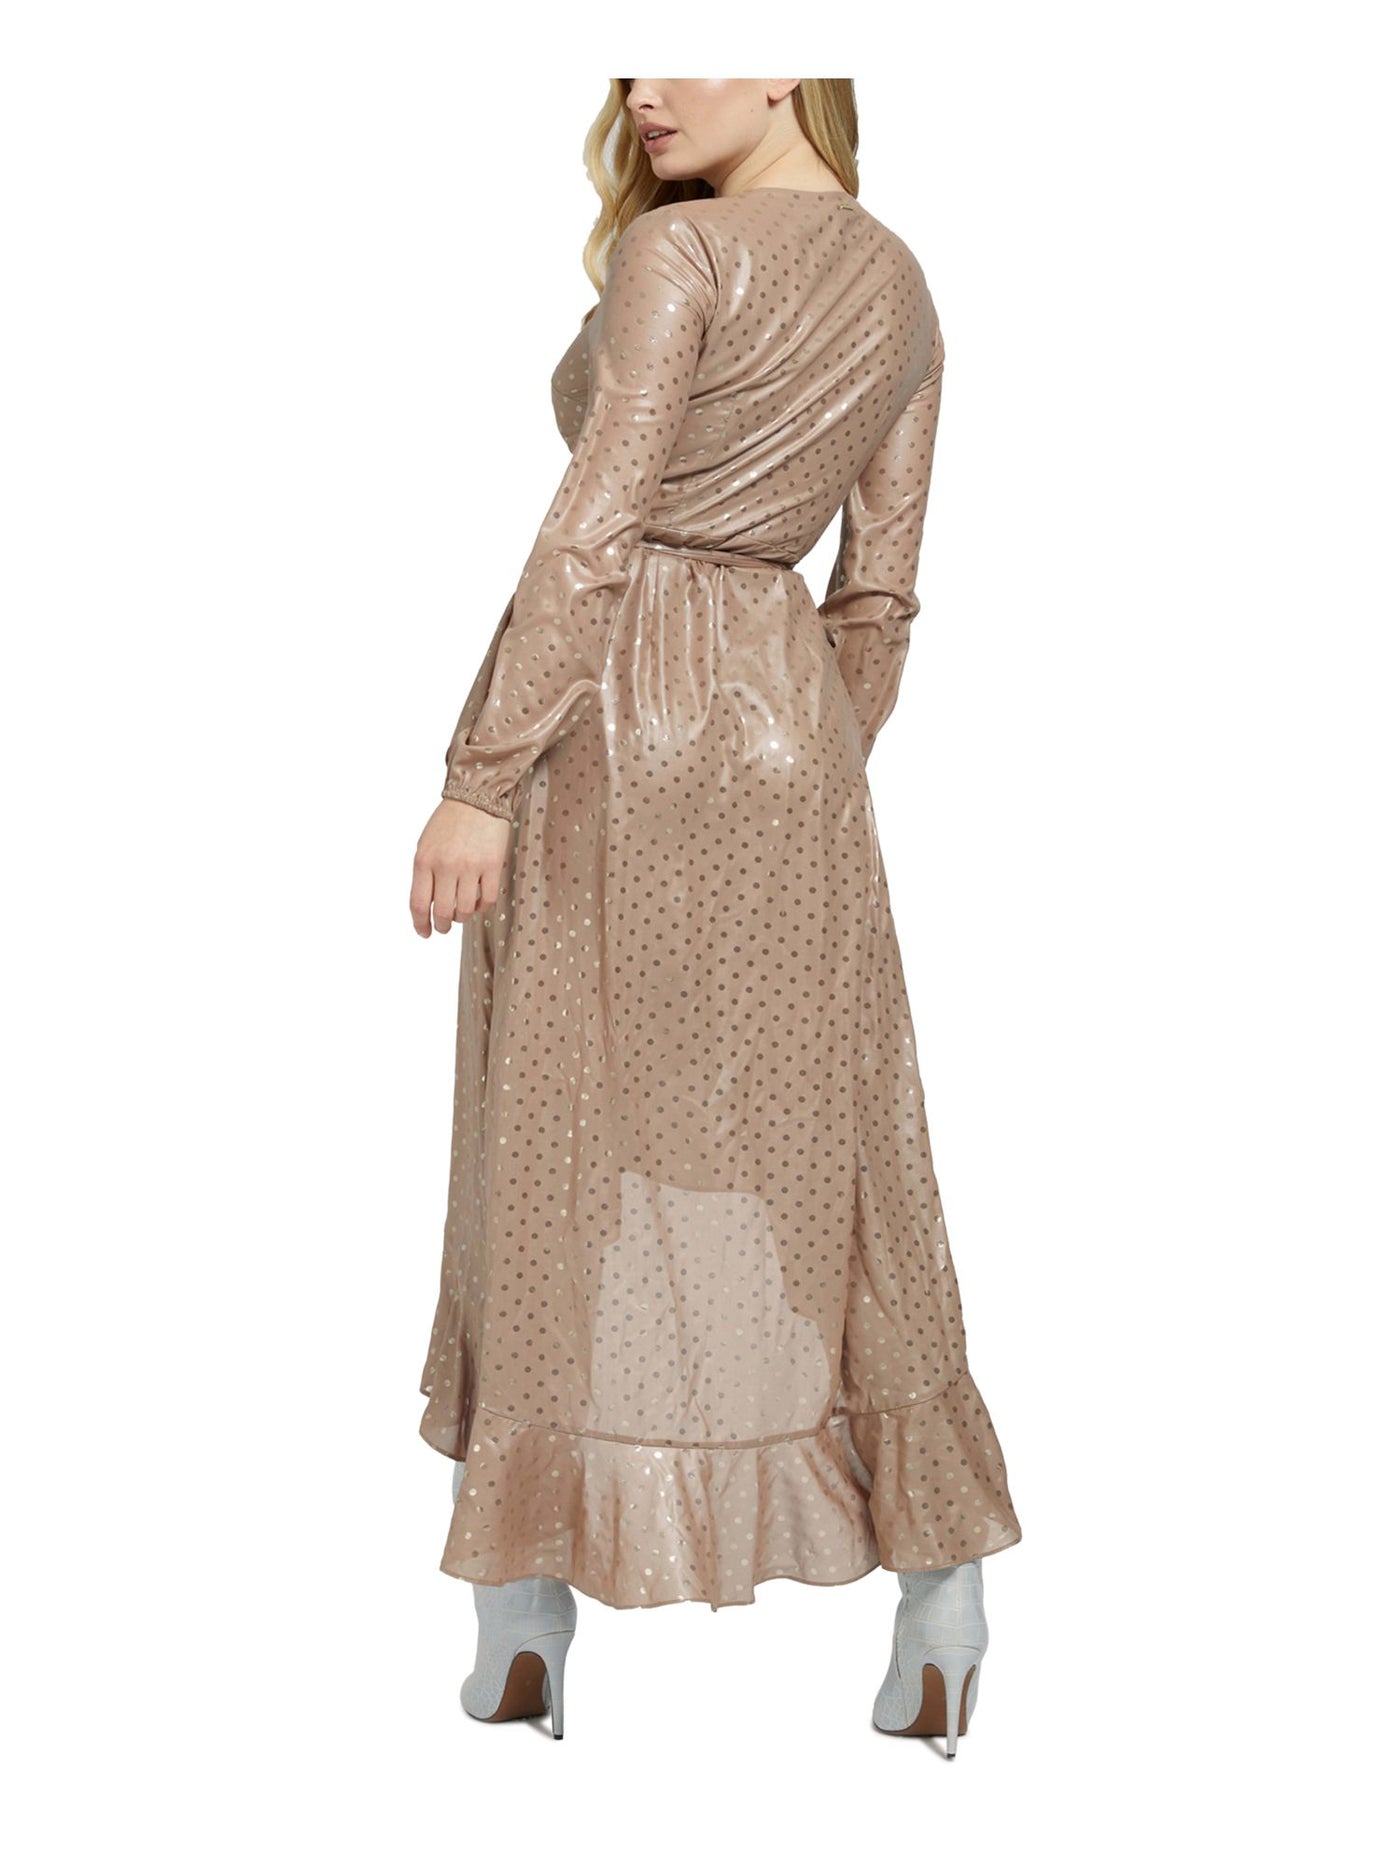 GUESS Womens Brown Tie Ruffled Metallic Lined Polka Dot Long Sleeve Surplice Neckline Midi Evening Wrap Dress XS